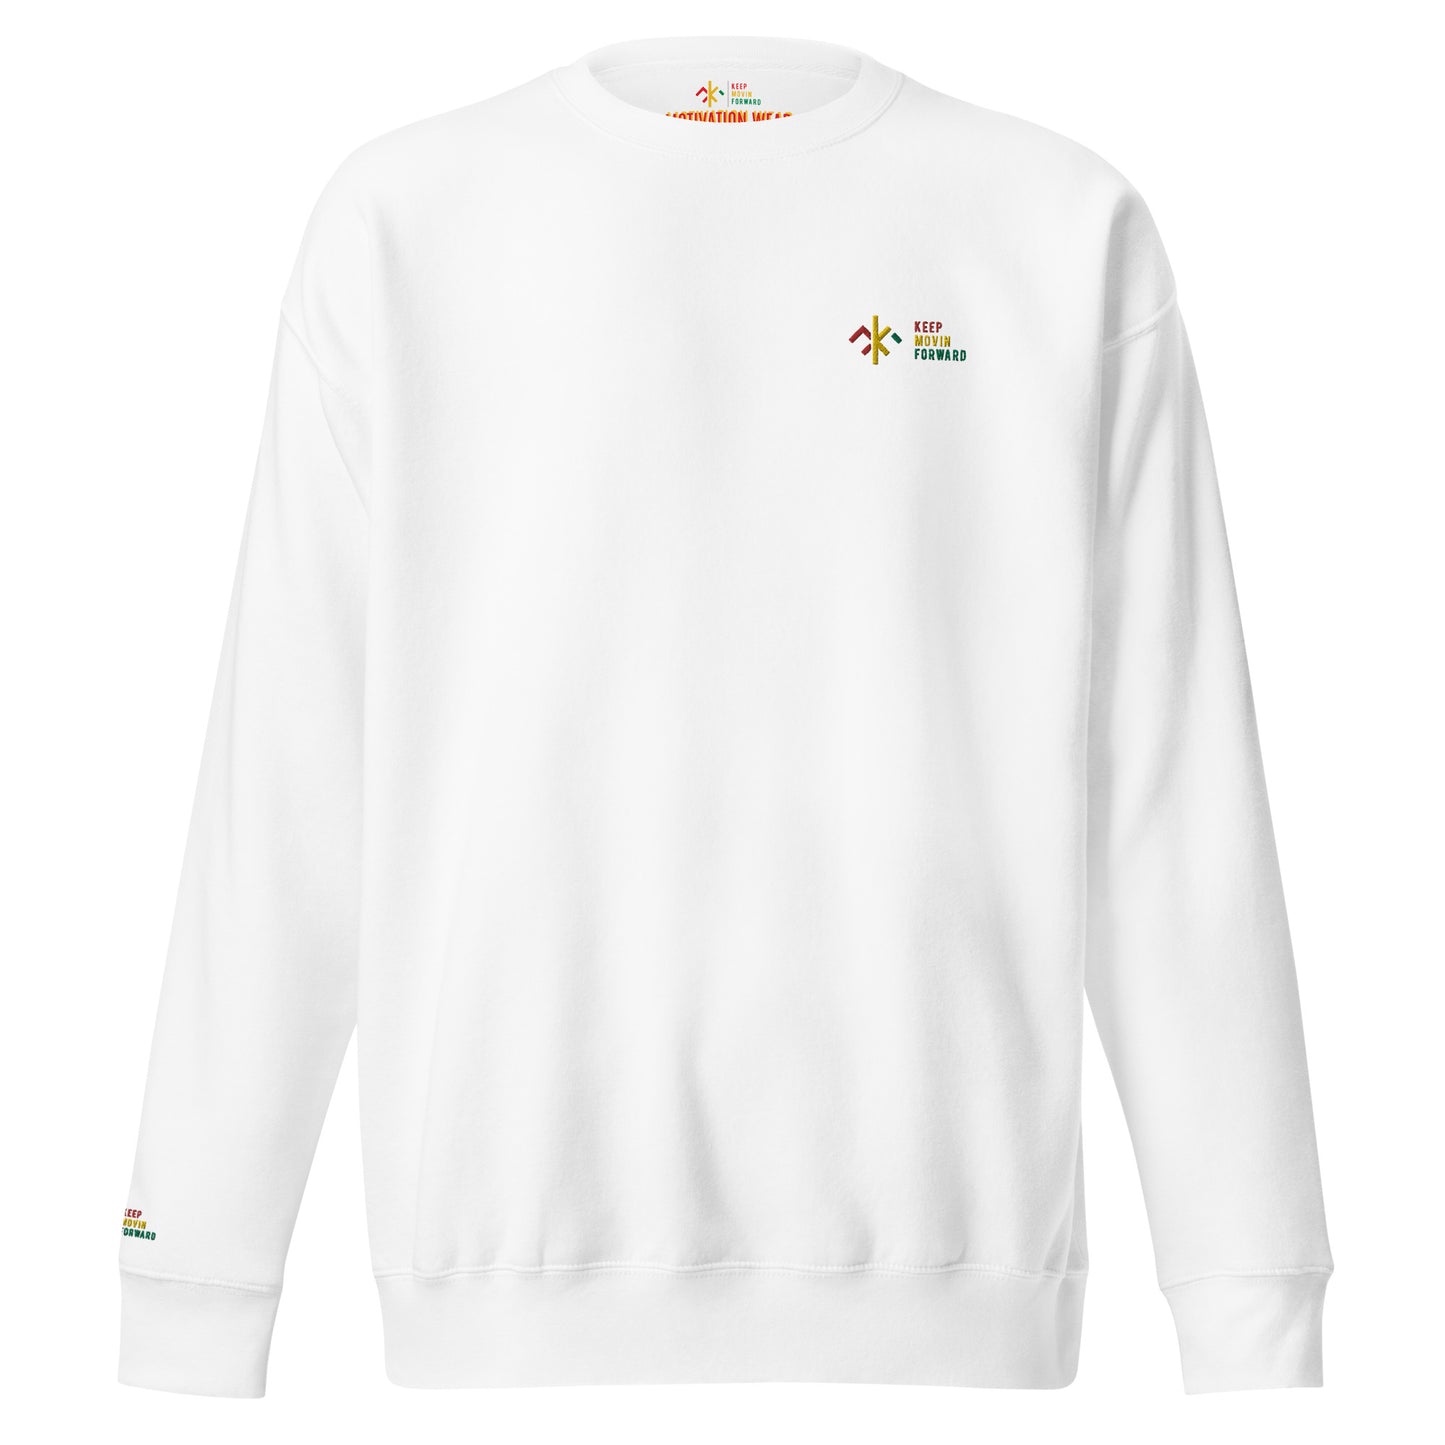 KMF (RGG) Premium Sweatshirt